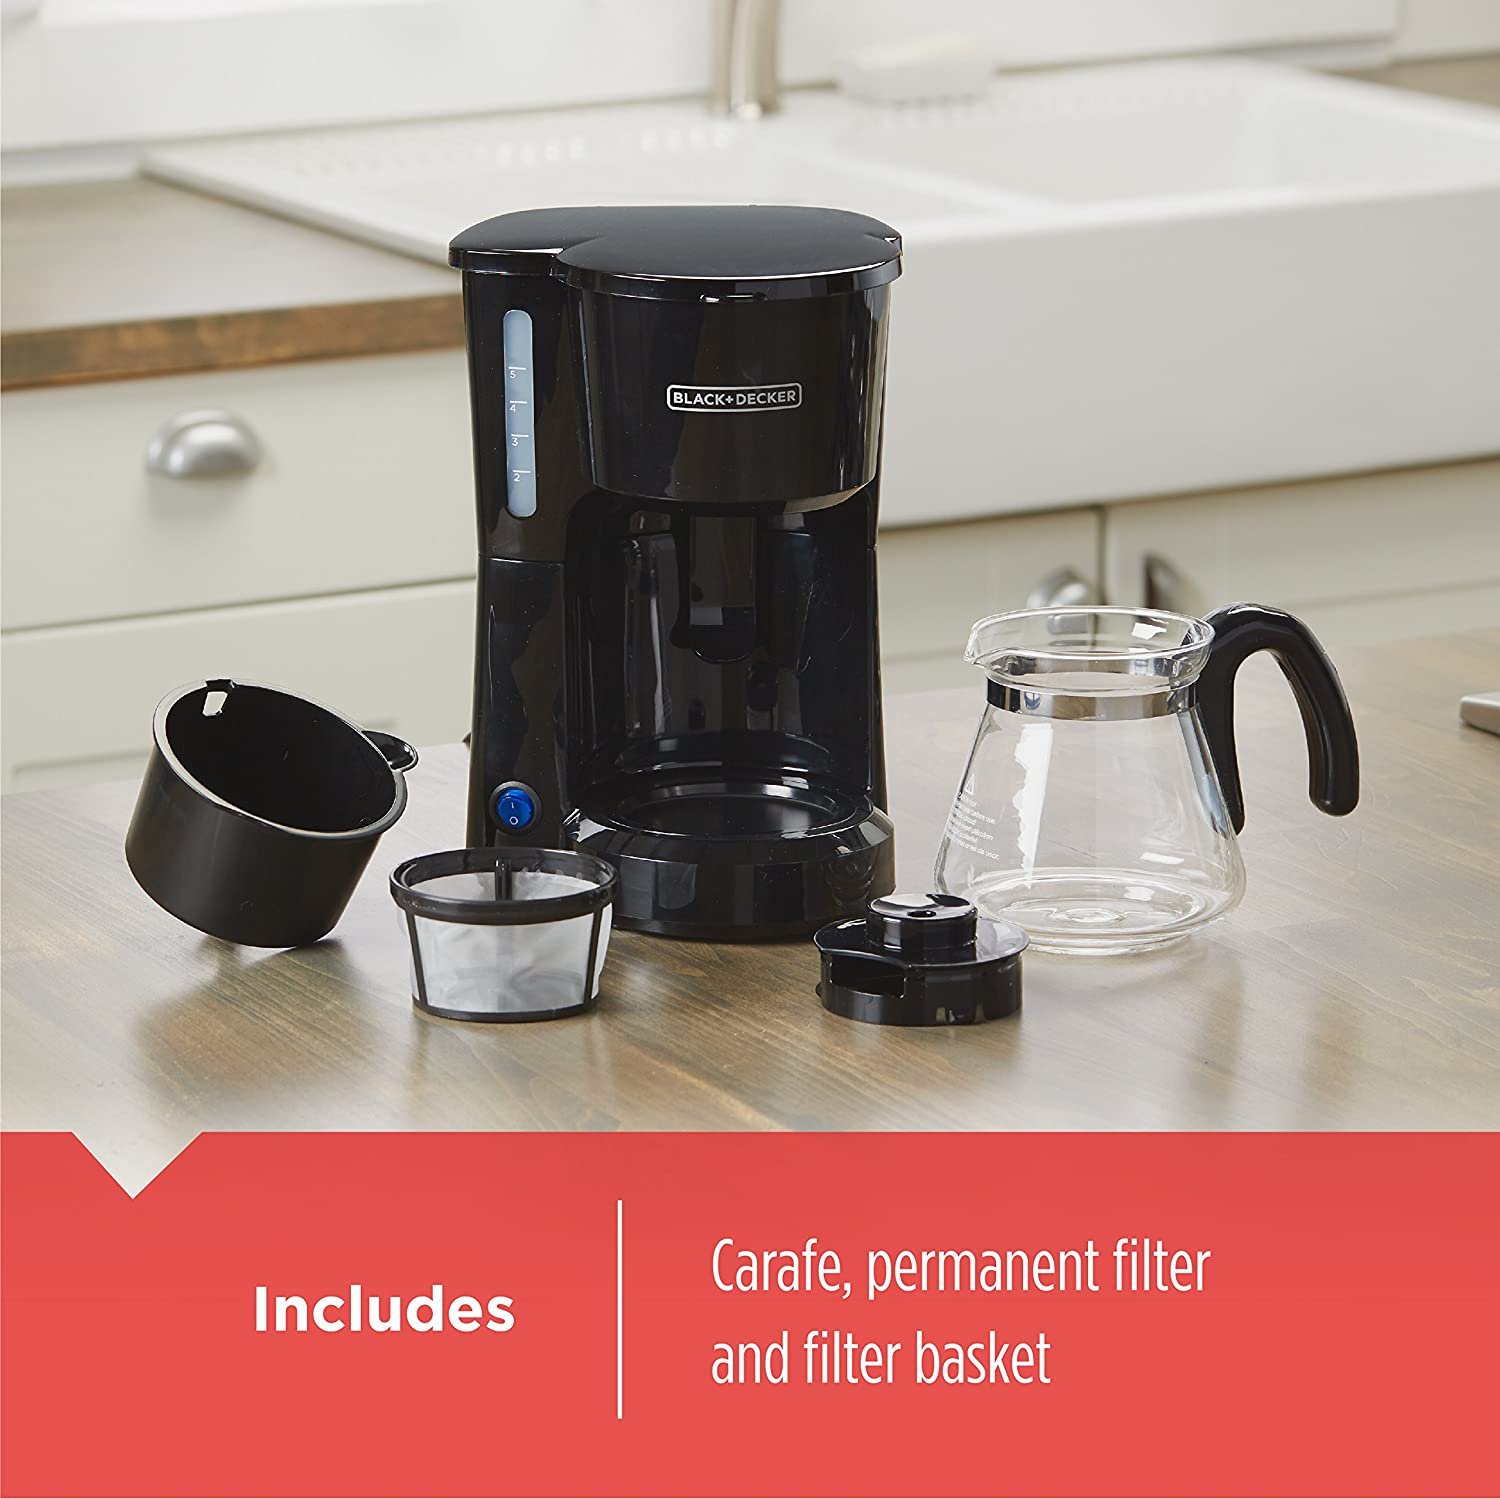 BLACK+DECKER 5-Cup Coffeemaker for home, dorm room, & small coffee shop